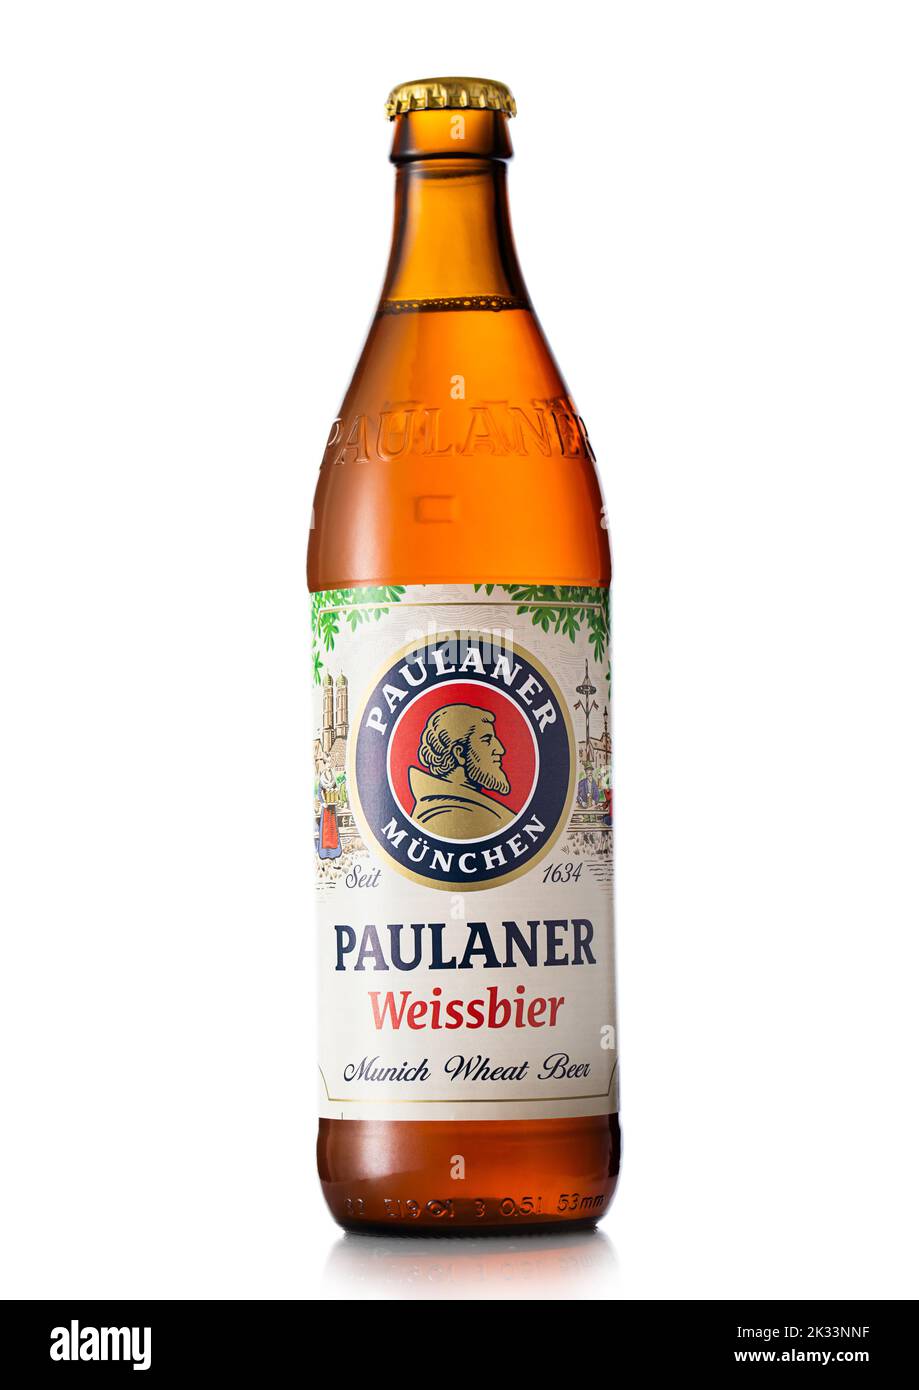 LONDON, UK - JULY 06, 2022: Bottle of Paulaner german wheat beer on white. Stock Photo